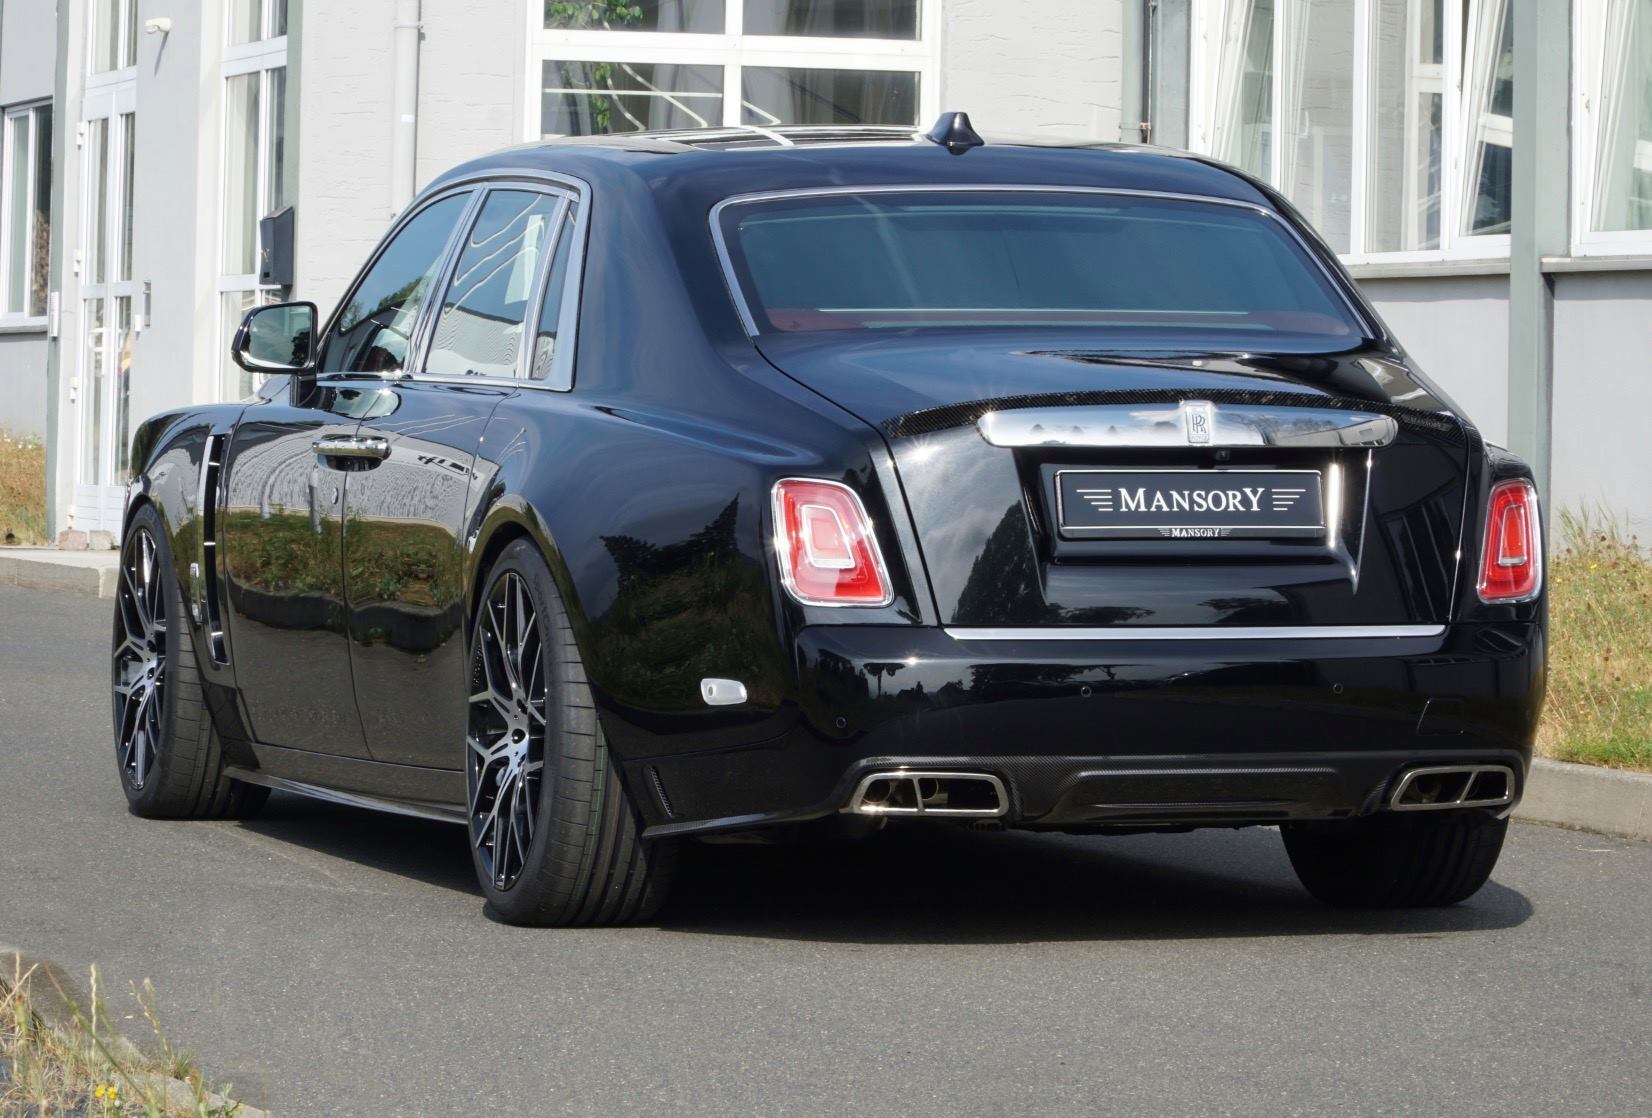 Rolls royce mansory. Rolls Royce Phantom 8 Mansory. Роллс Ройс Mansory. Rolls Royce Phantom 2021 Mansory. Rolls Royce Phantom Mansory.